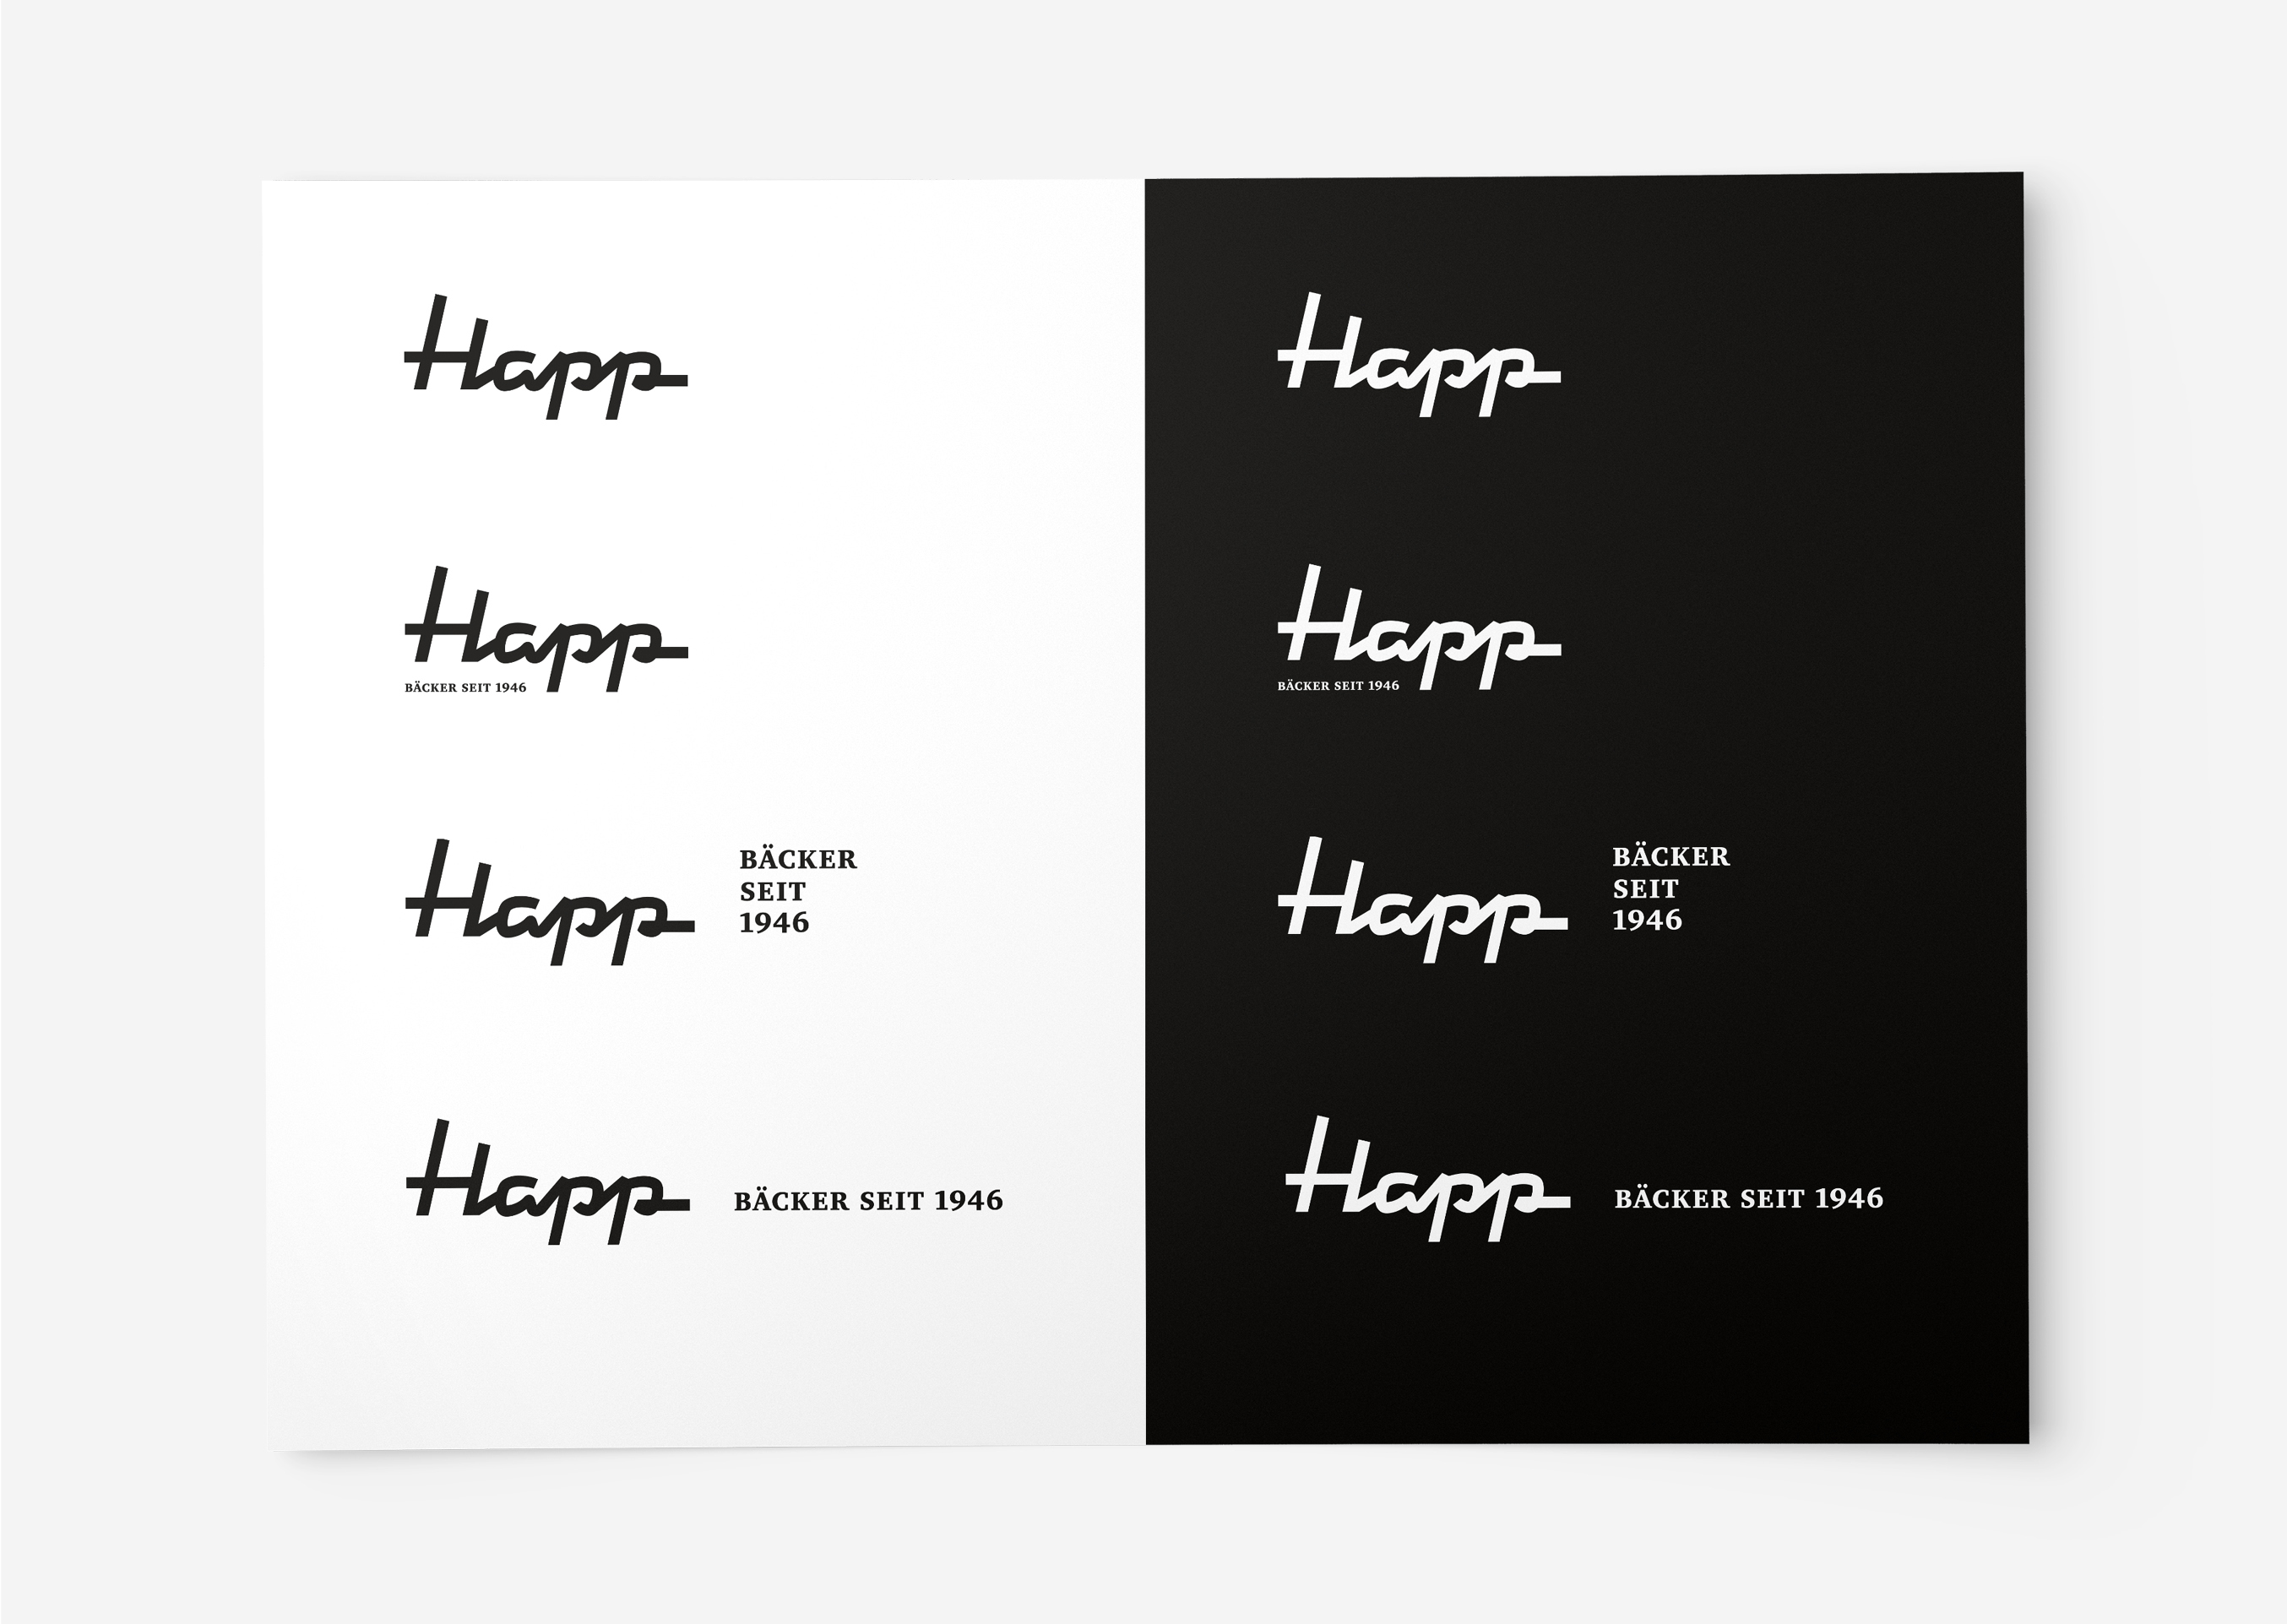 Happ – Bäcker seit 1946 (Corporate Design)